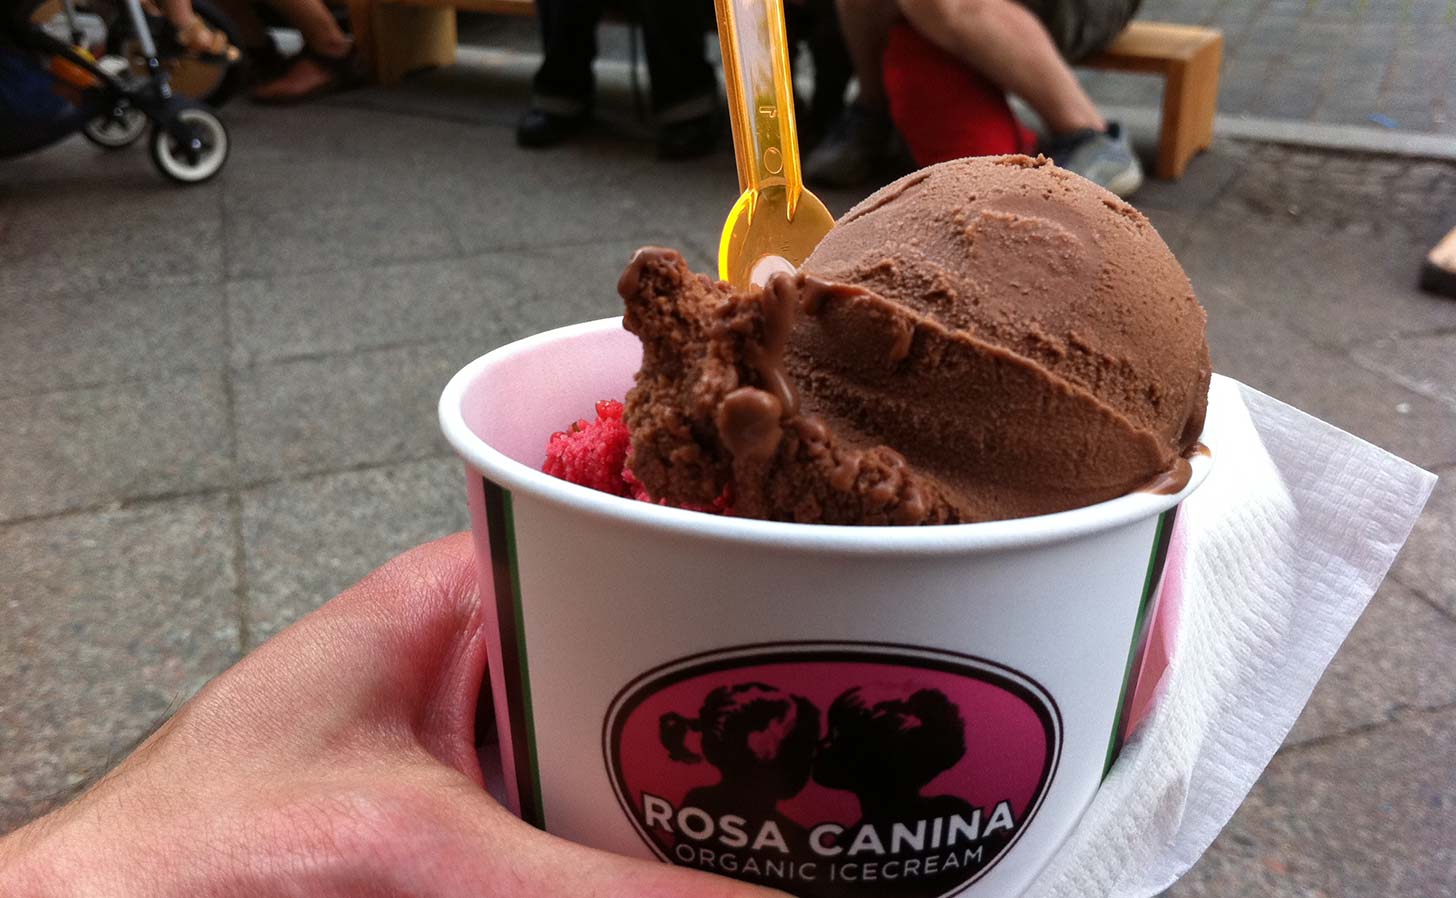 Rosa Canina ice cream, Berlin. Photo: Berlinow